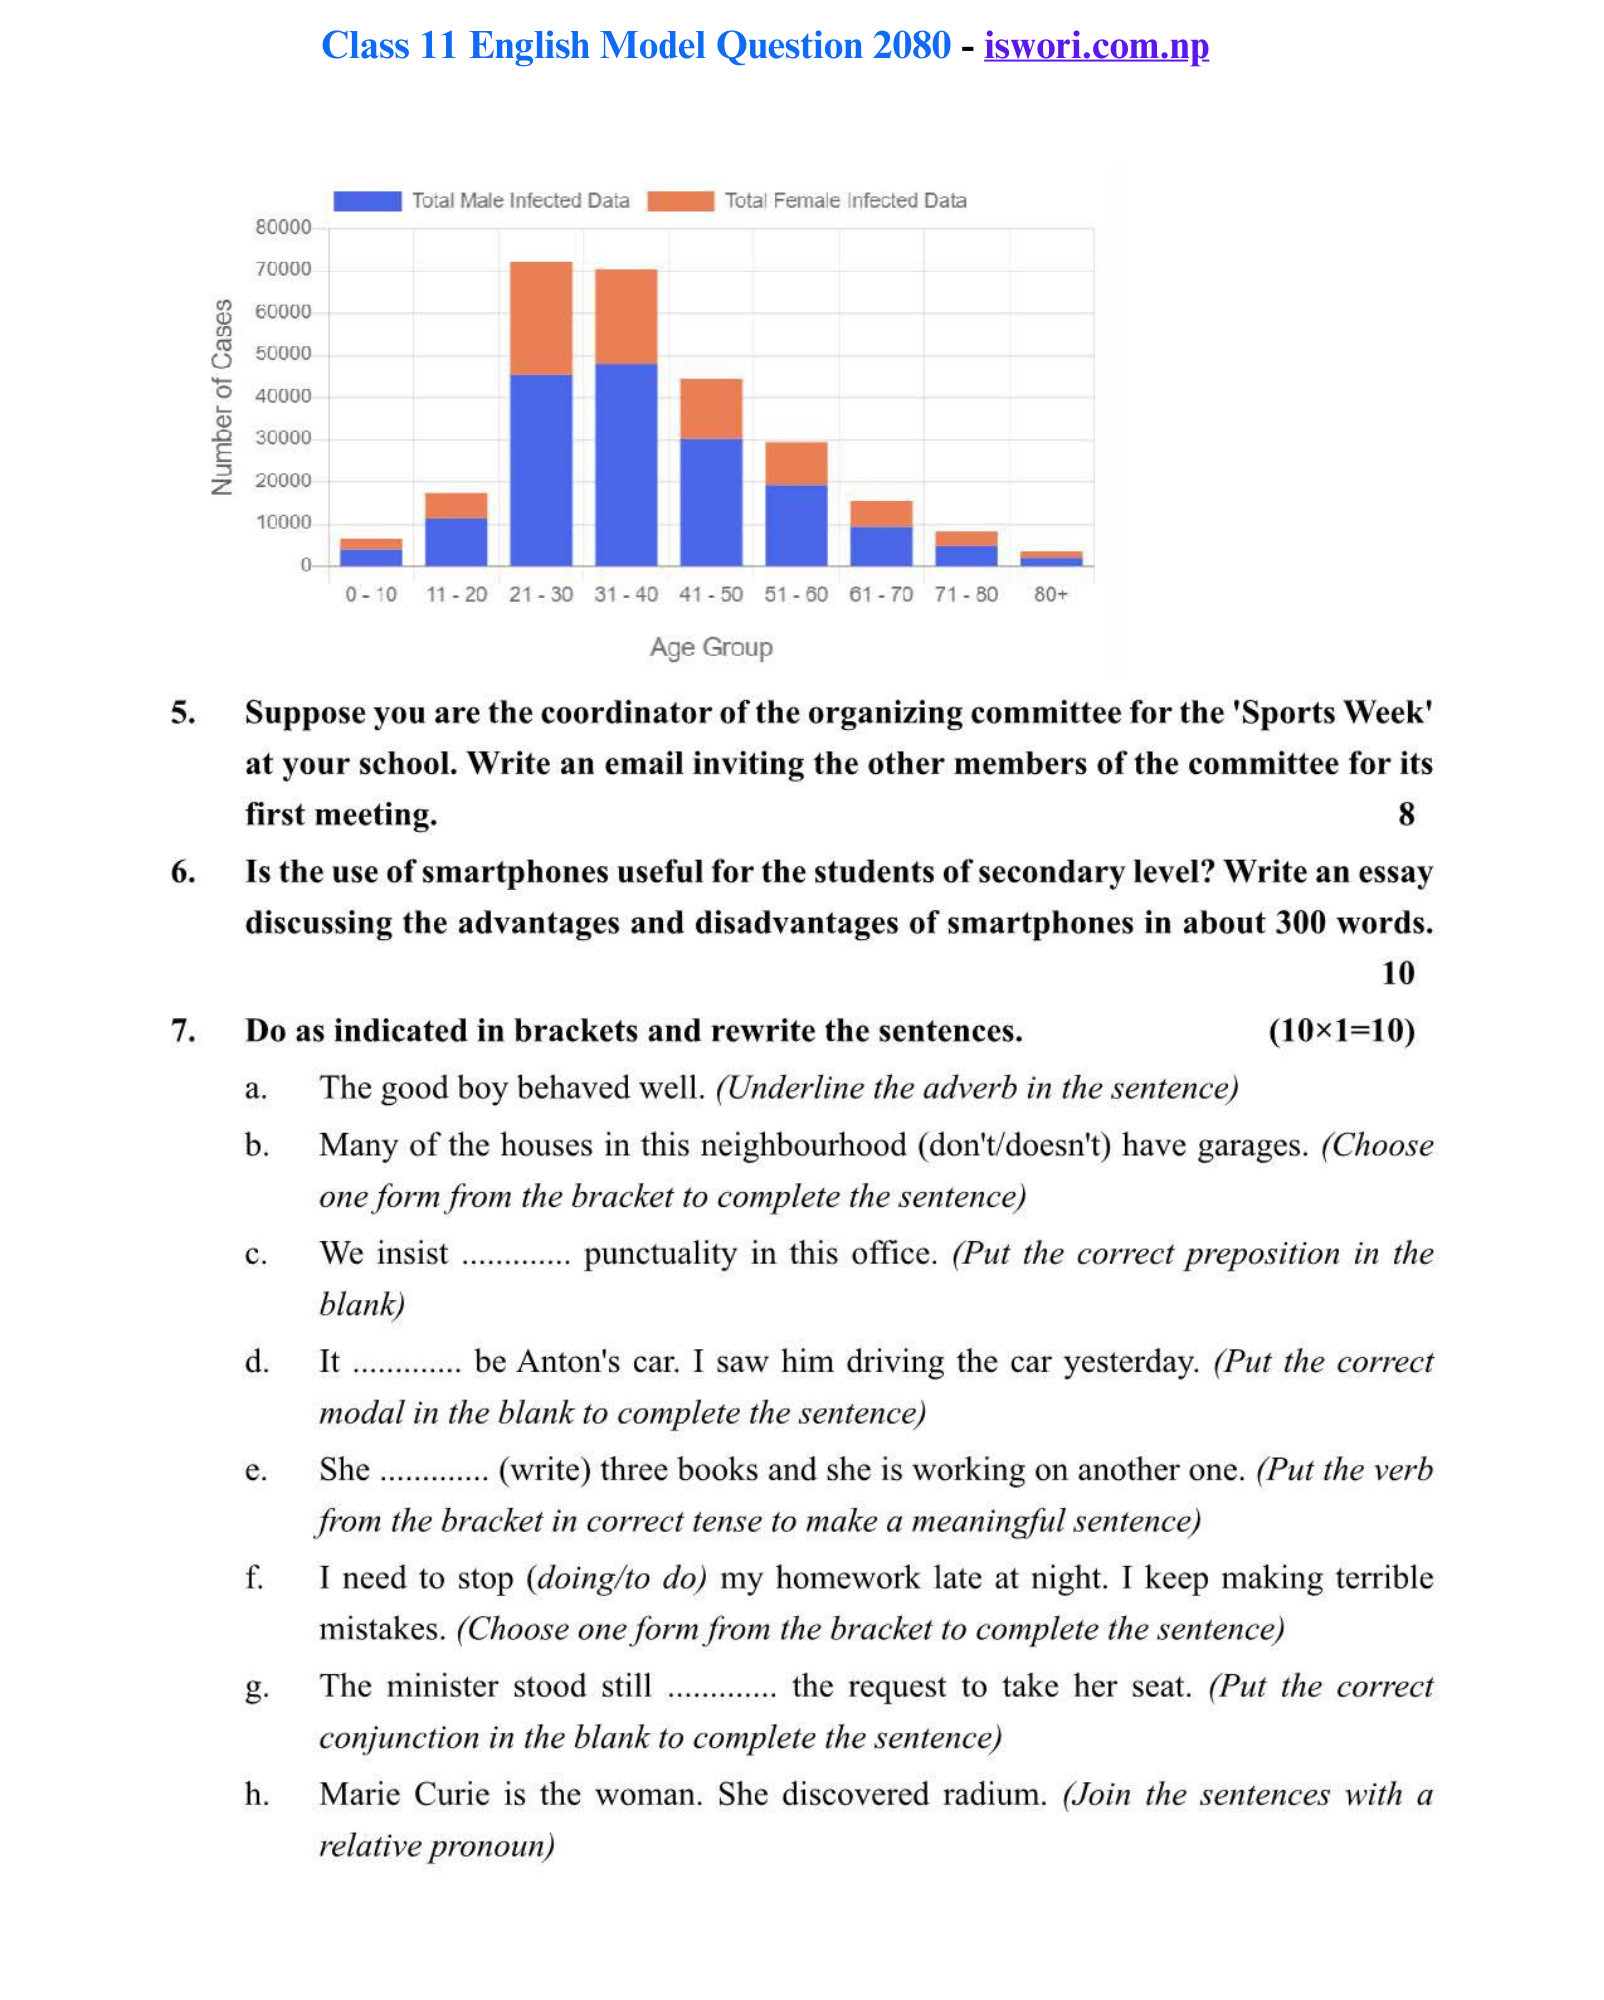 NEB Class 11 English Model Question 2080 PDF